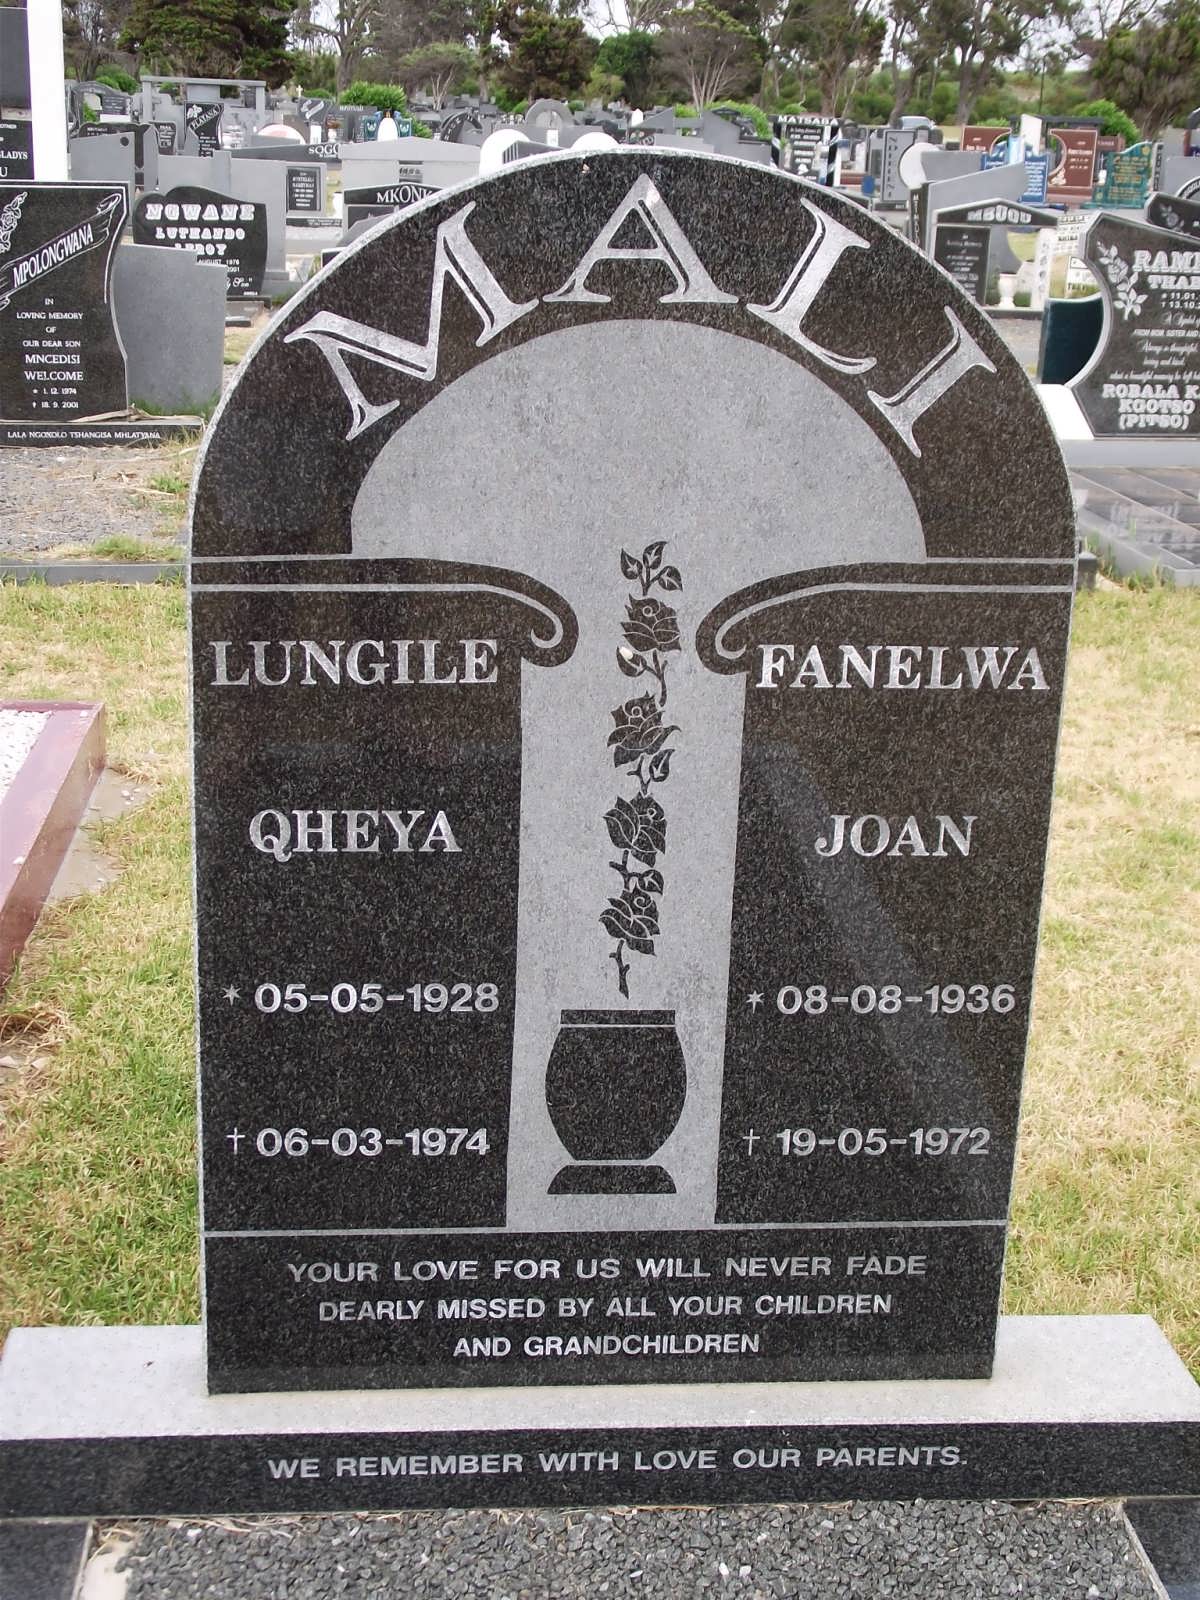 MALI Lungile Qheya 1928-1974 & Fanelwa Joan 1936-1972